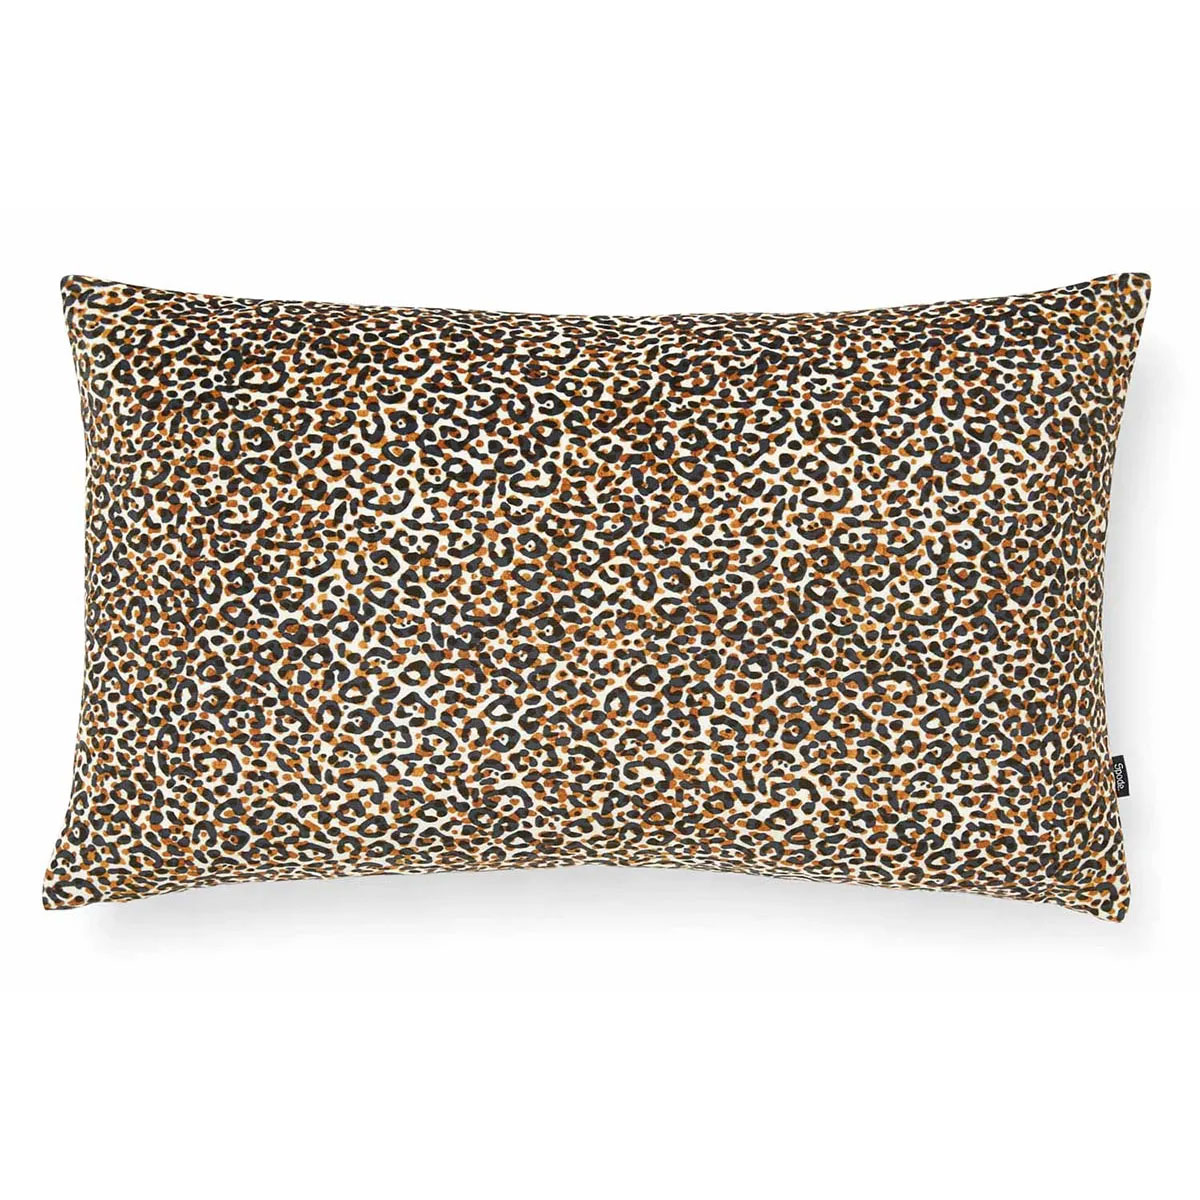 Creatures Of Curiosity Scatter Cushion 30x50 cm, Leopard